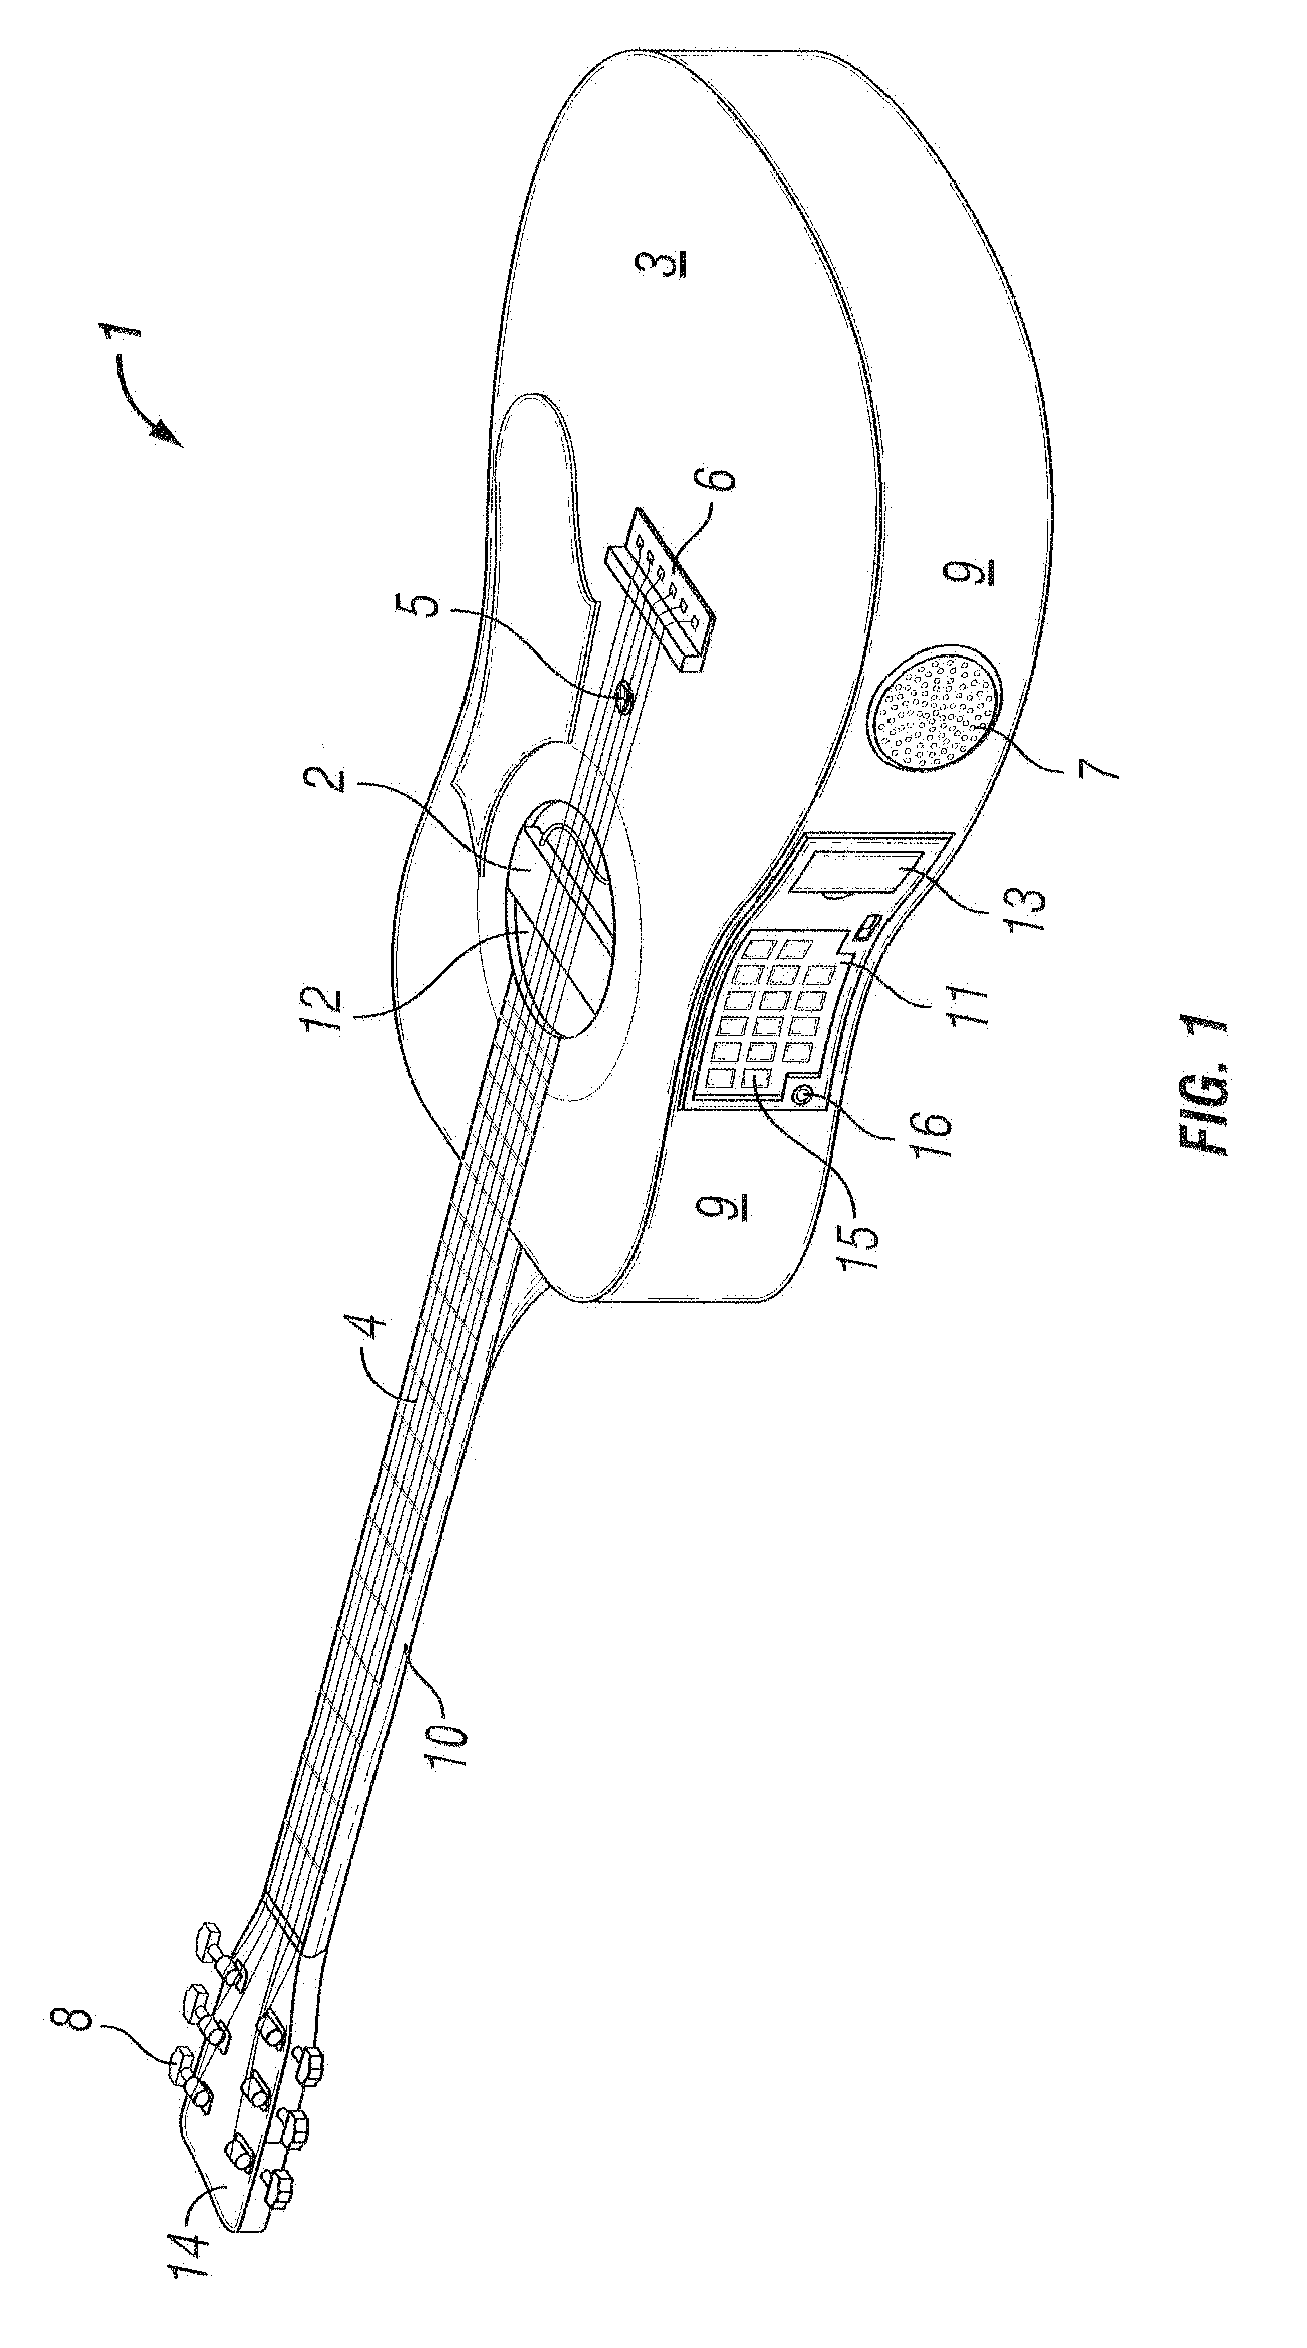 Guitar and accompaniment apparatus